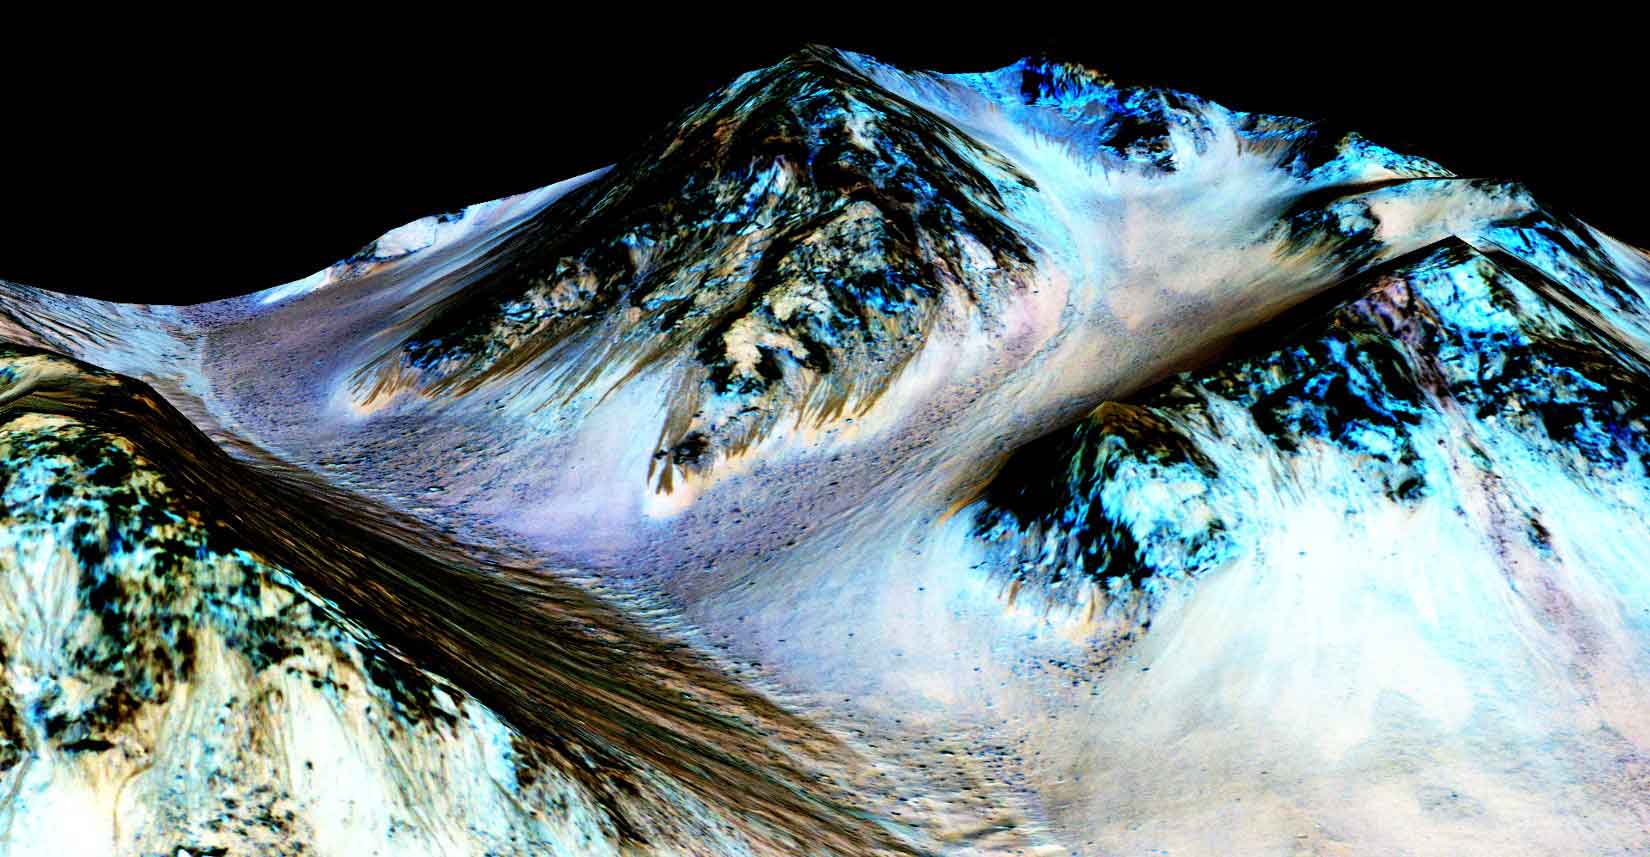 NASA image of water on mars